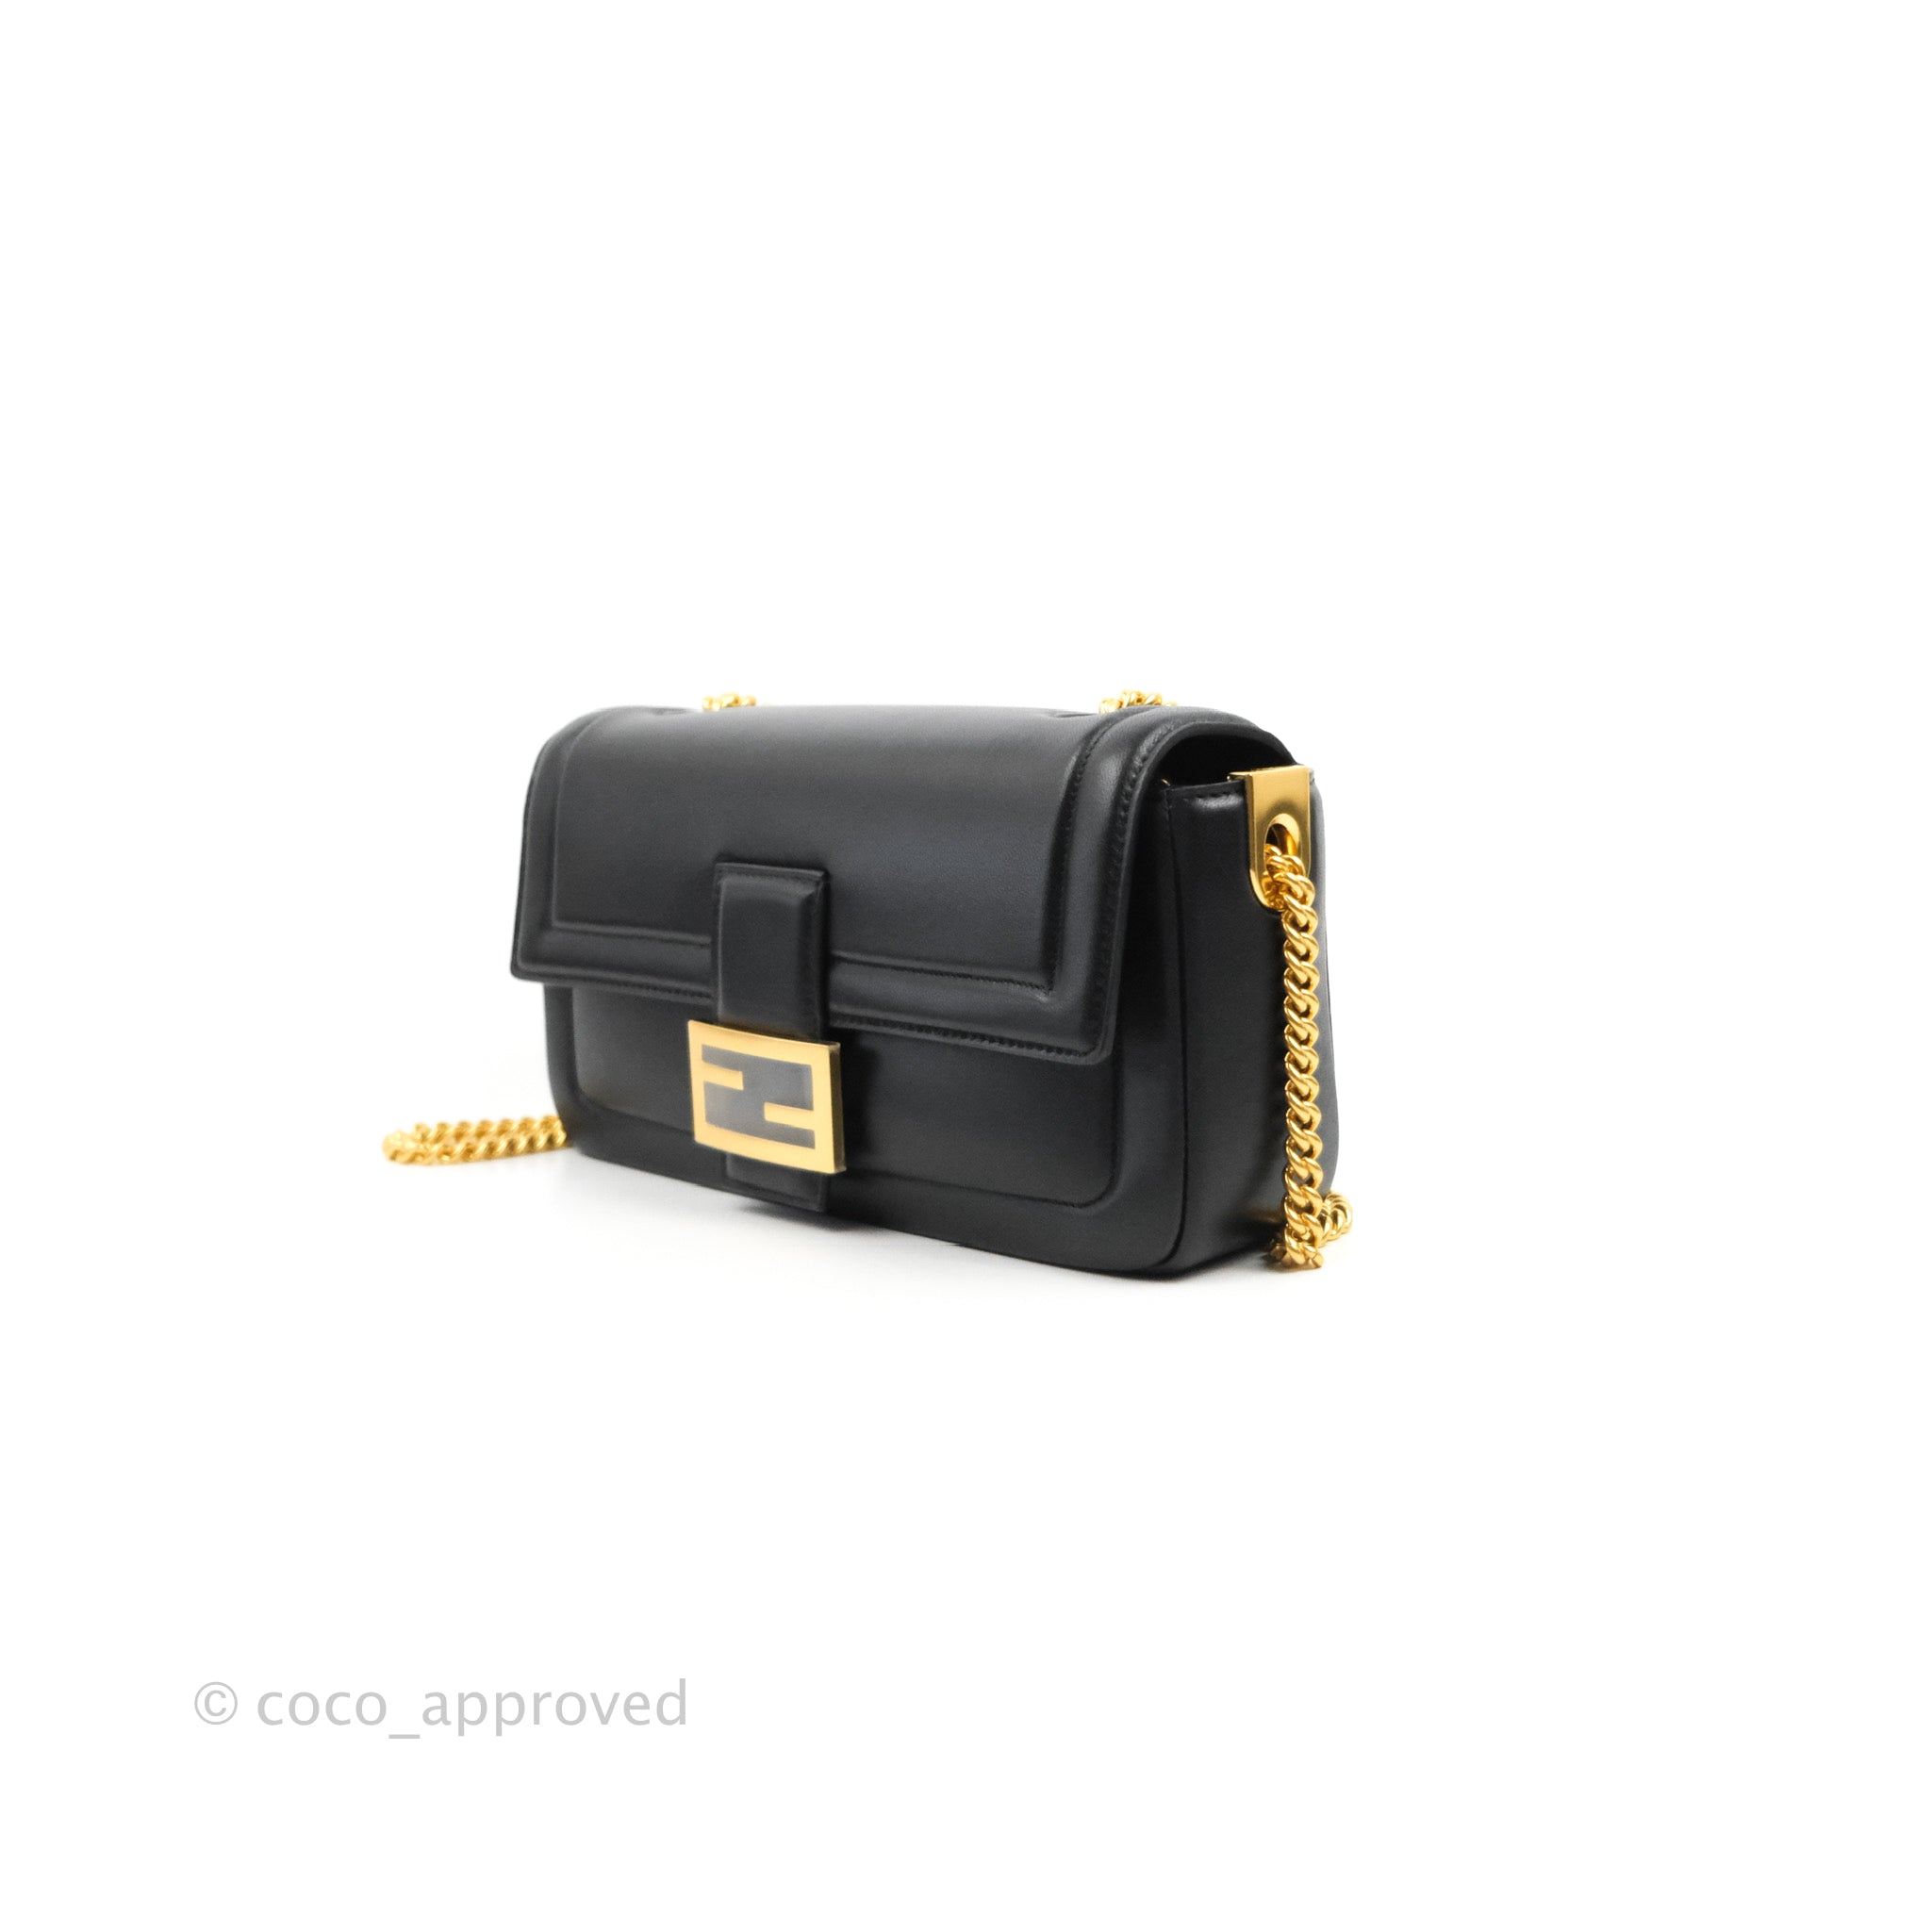 Fendi Baguette leather pouch - ShopStyle Briefcases